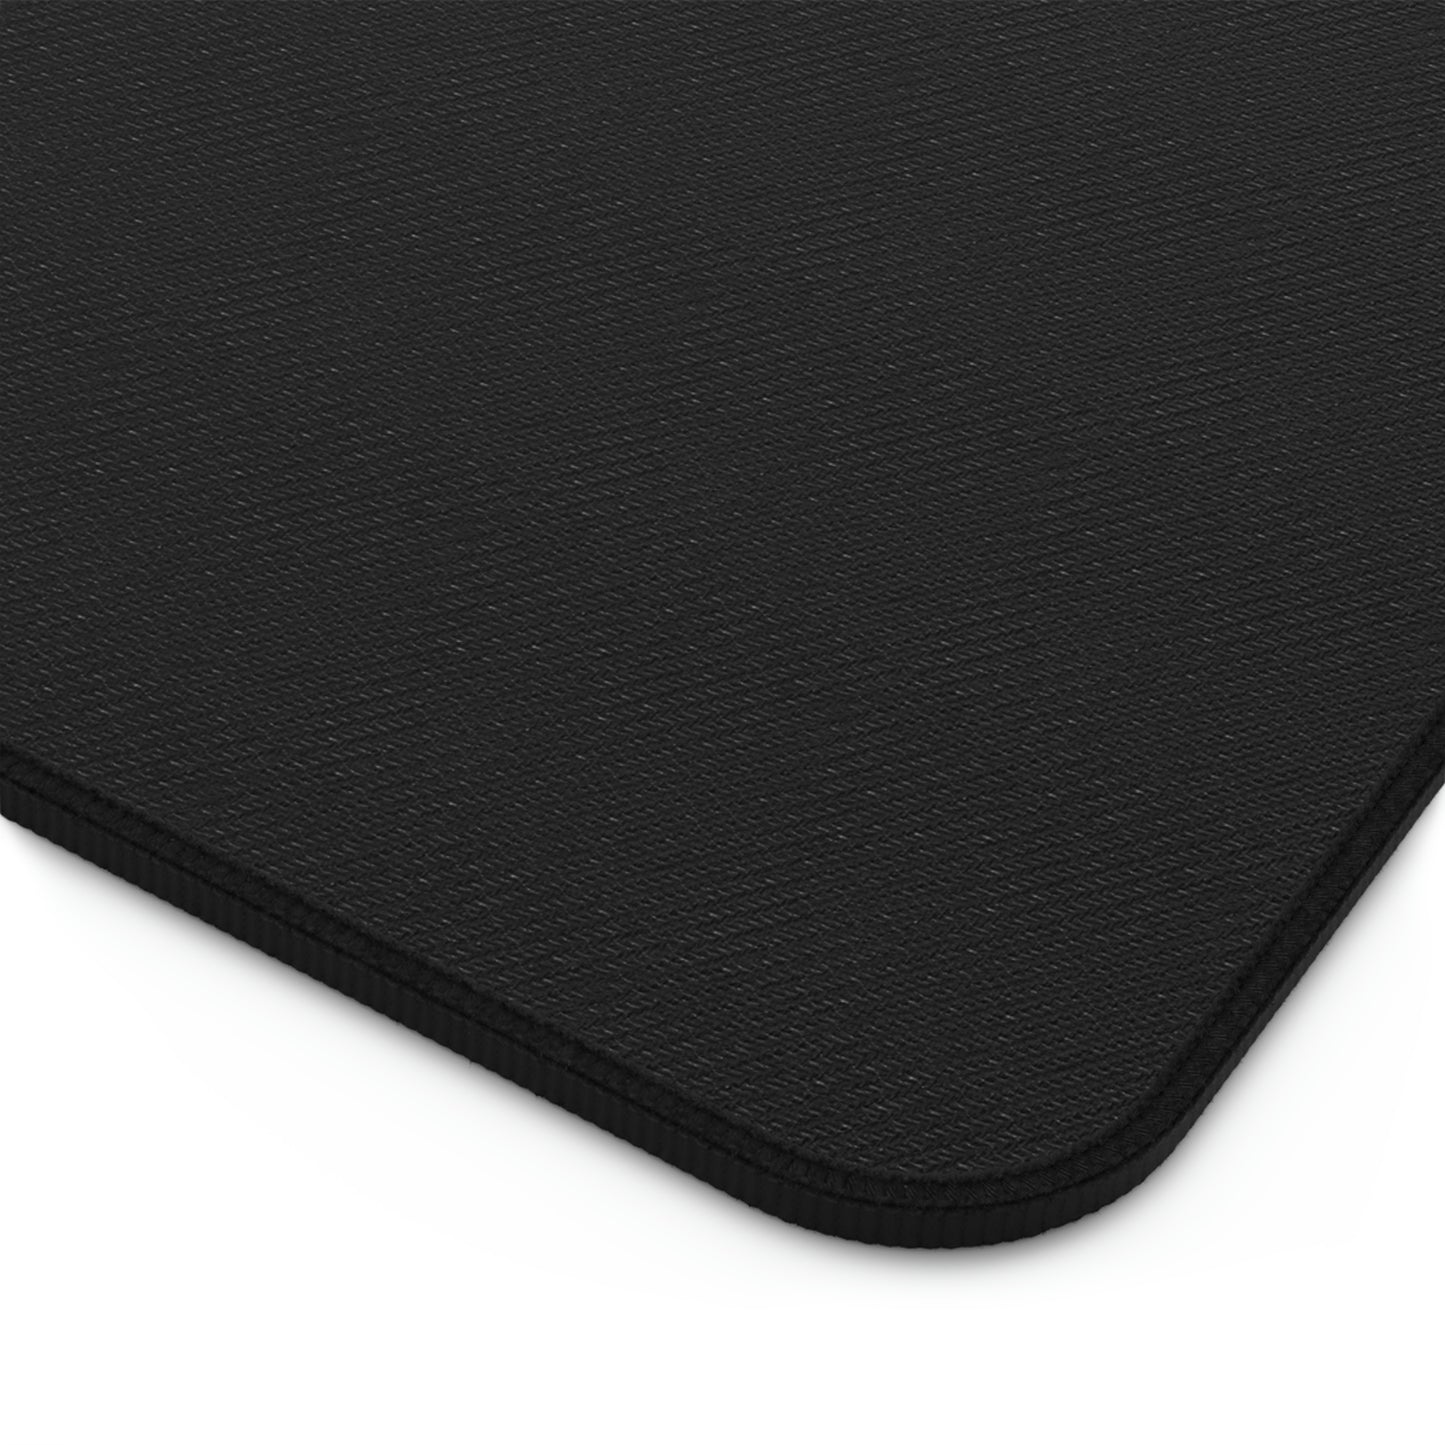 The black rubber bottom of a pale flower desk mat.